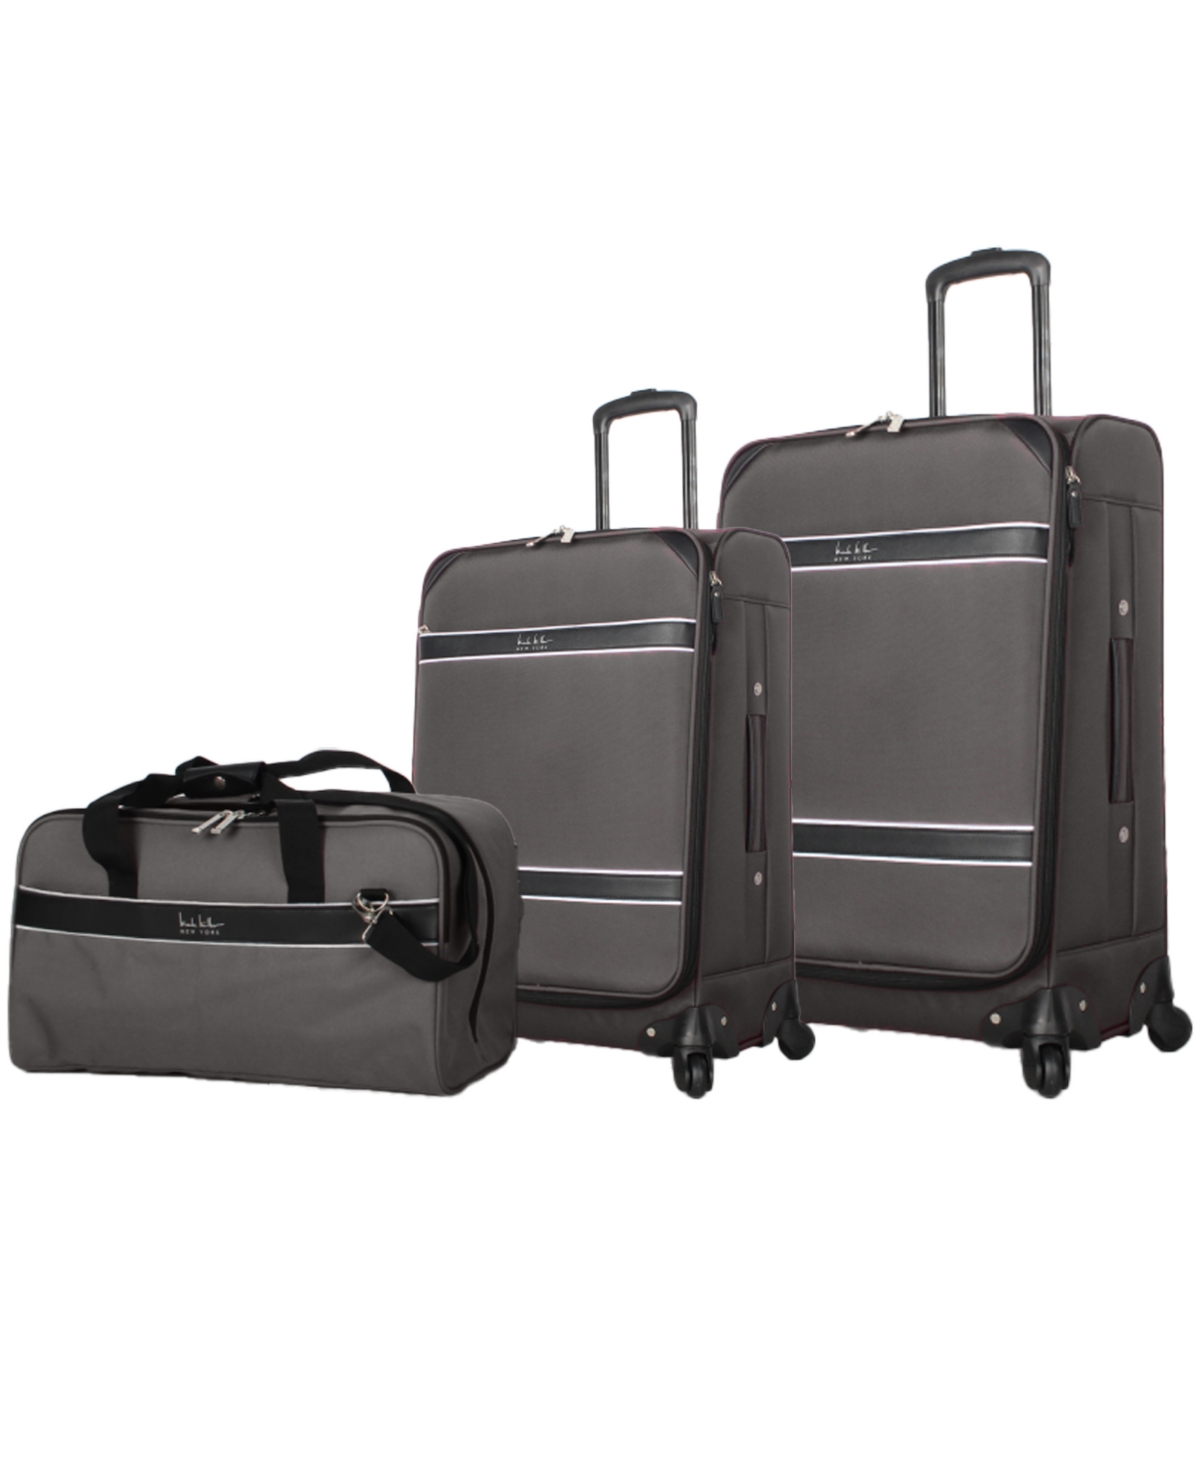 Sam 3 Piece Luggage Set - Grey